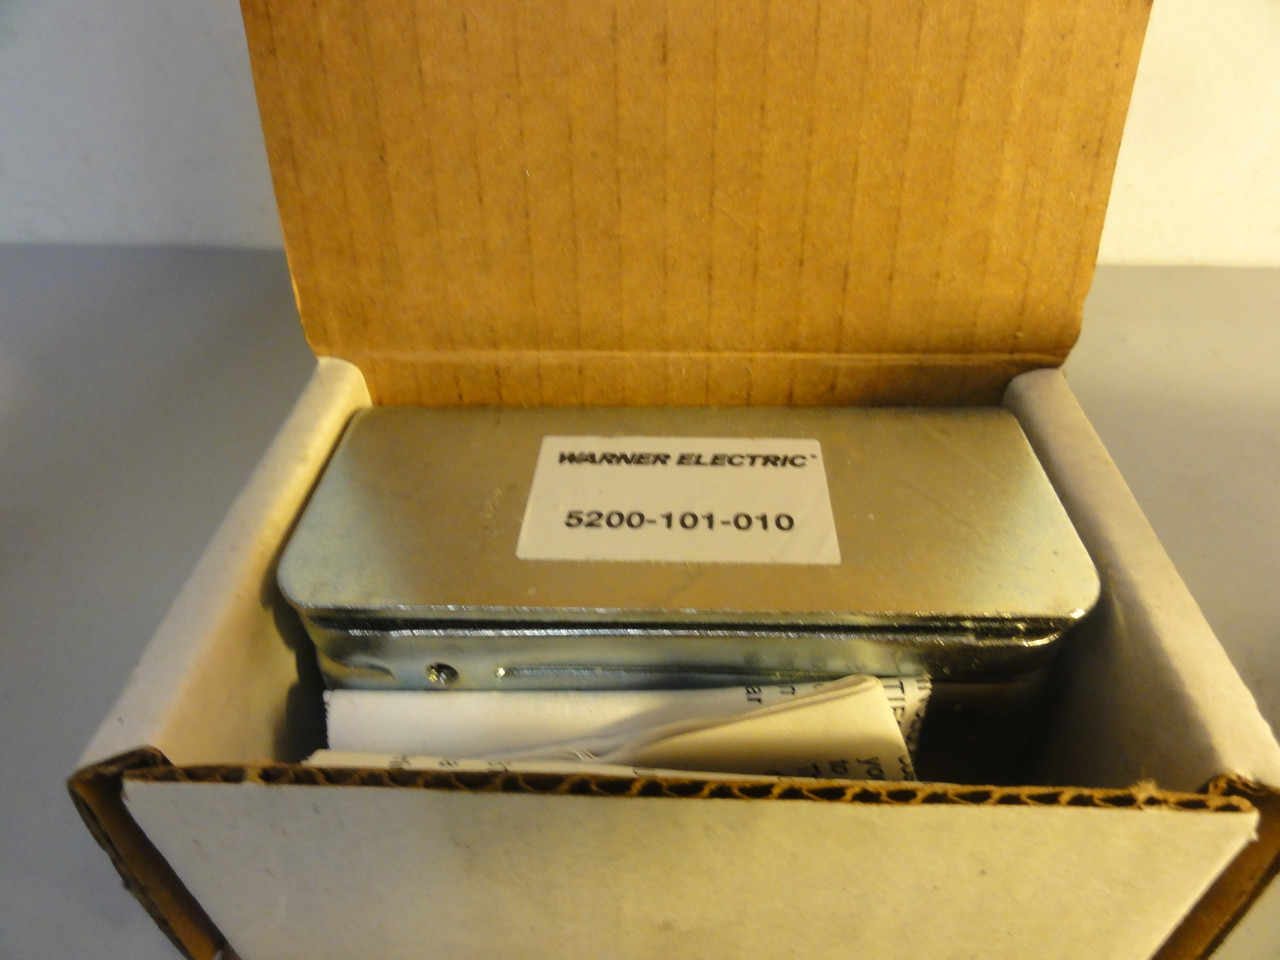 Warner Electric 5200-101-010 Conduit Box (Lot of 3) New (Open Box)